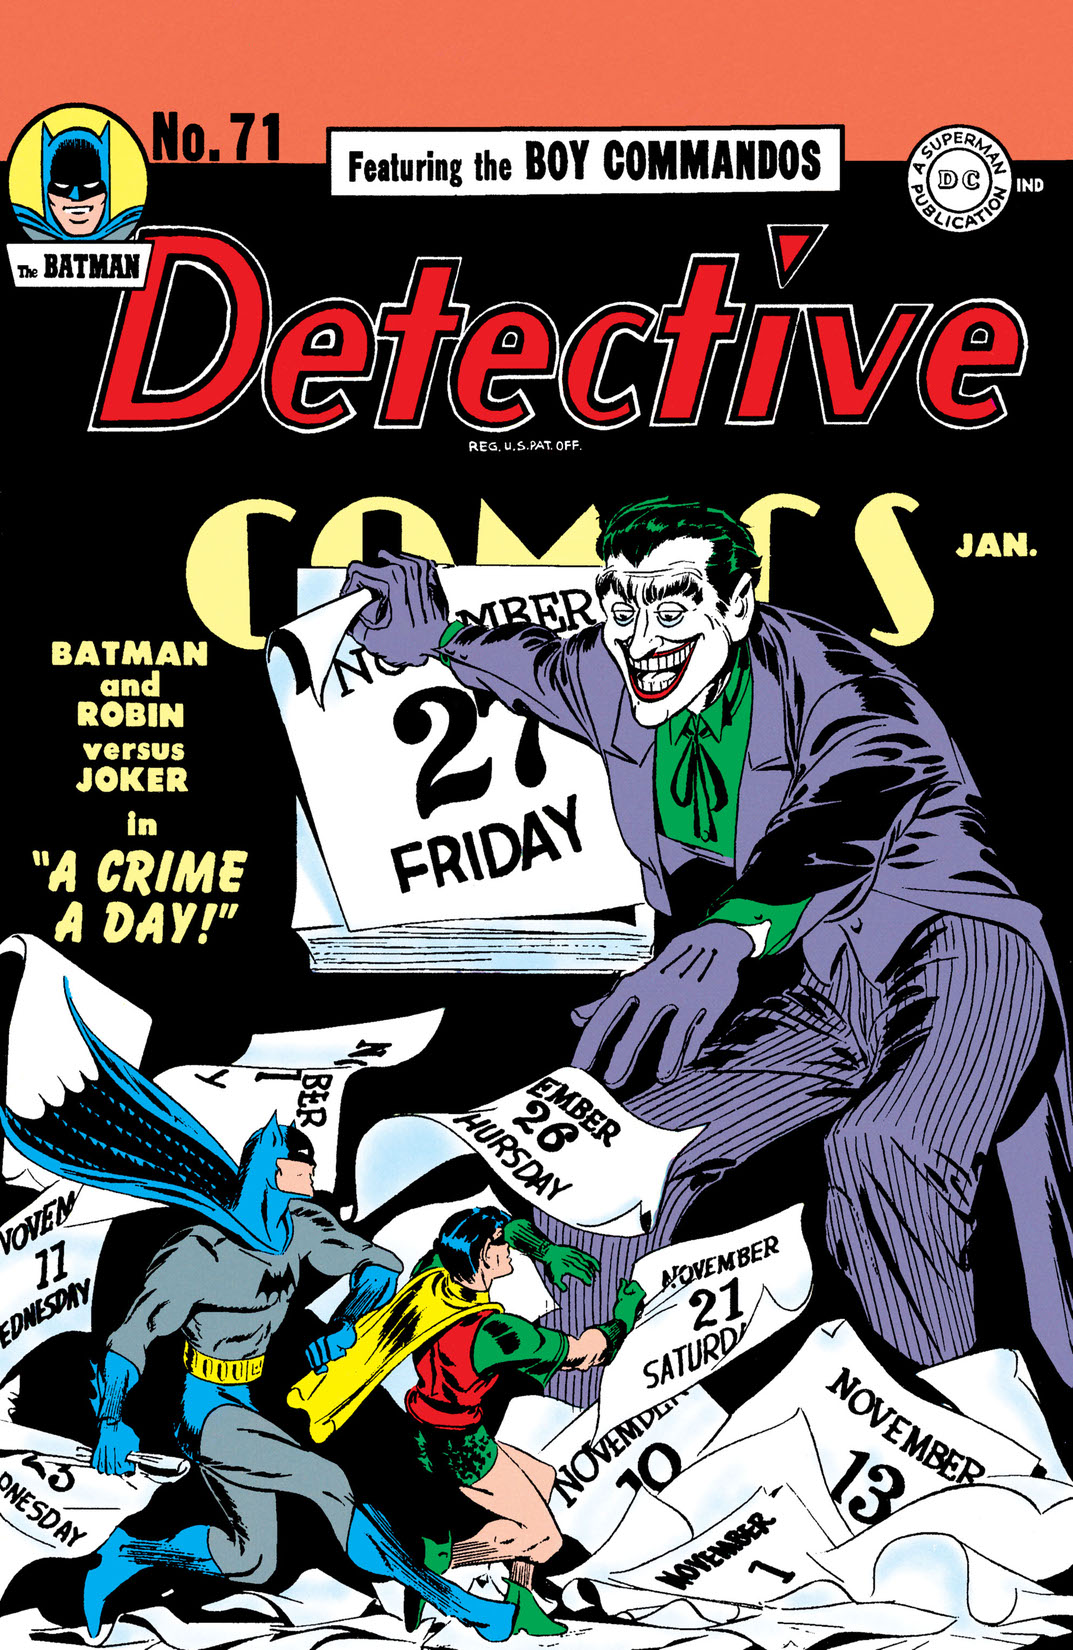 Detective Comics (1942-) #71 preview images